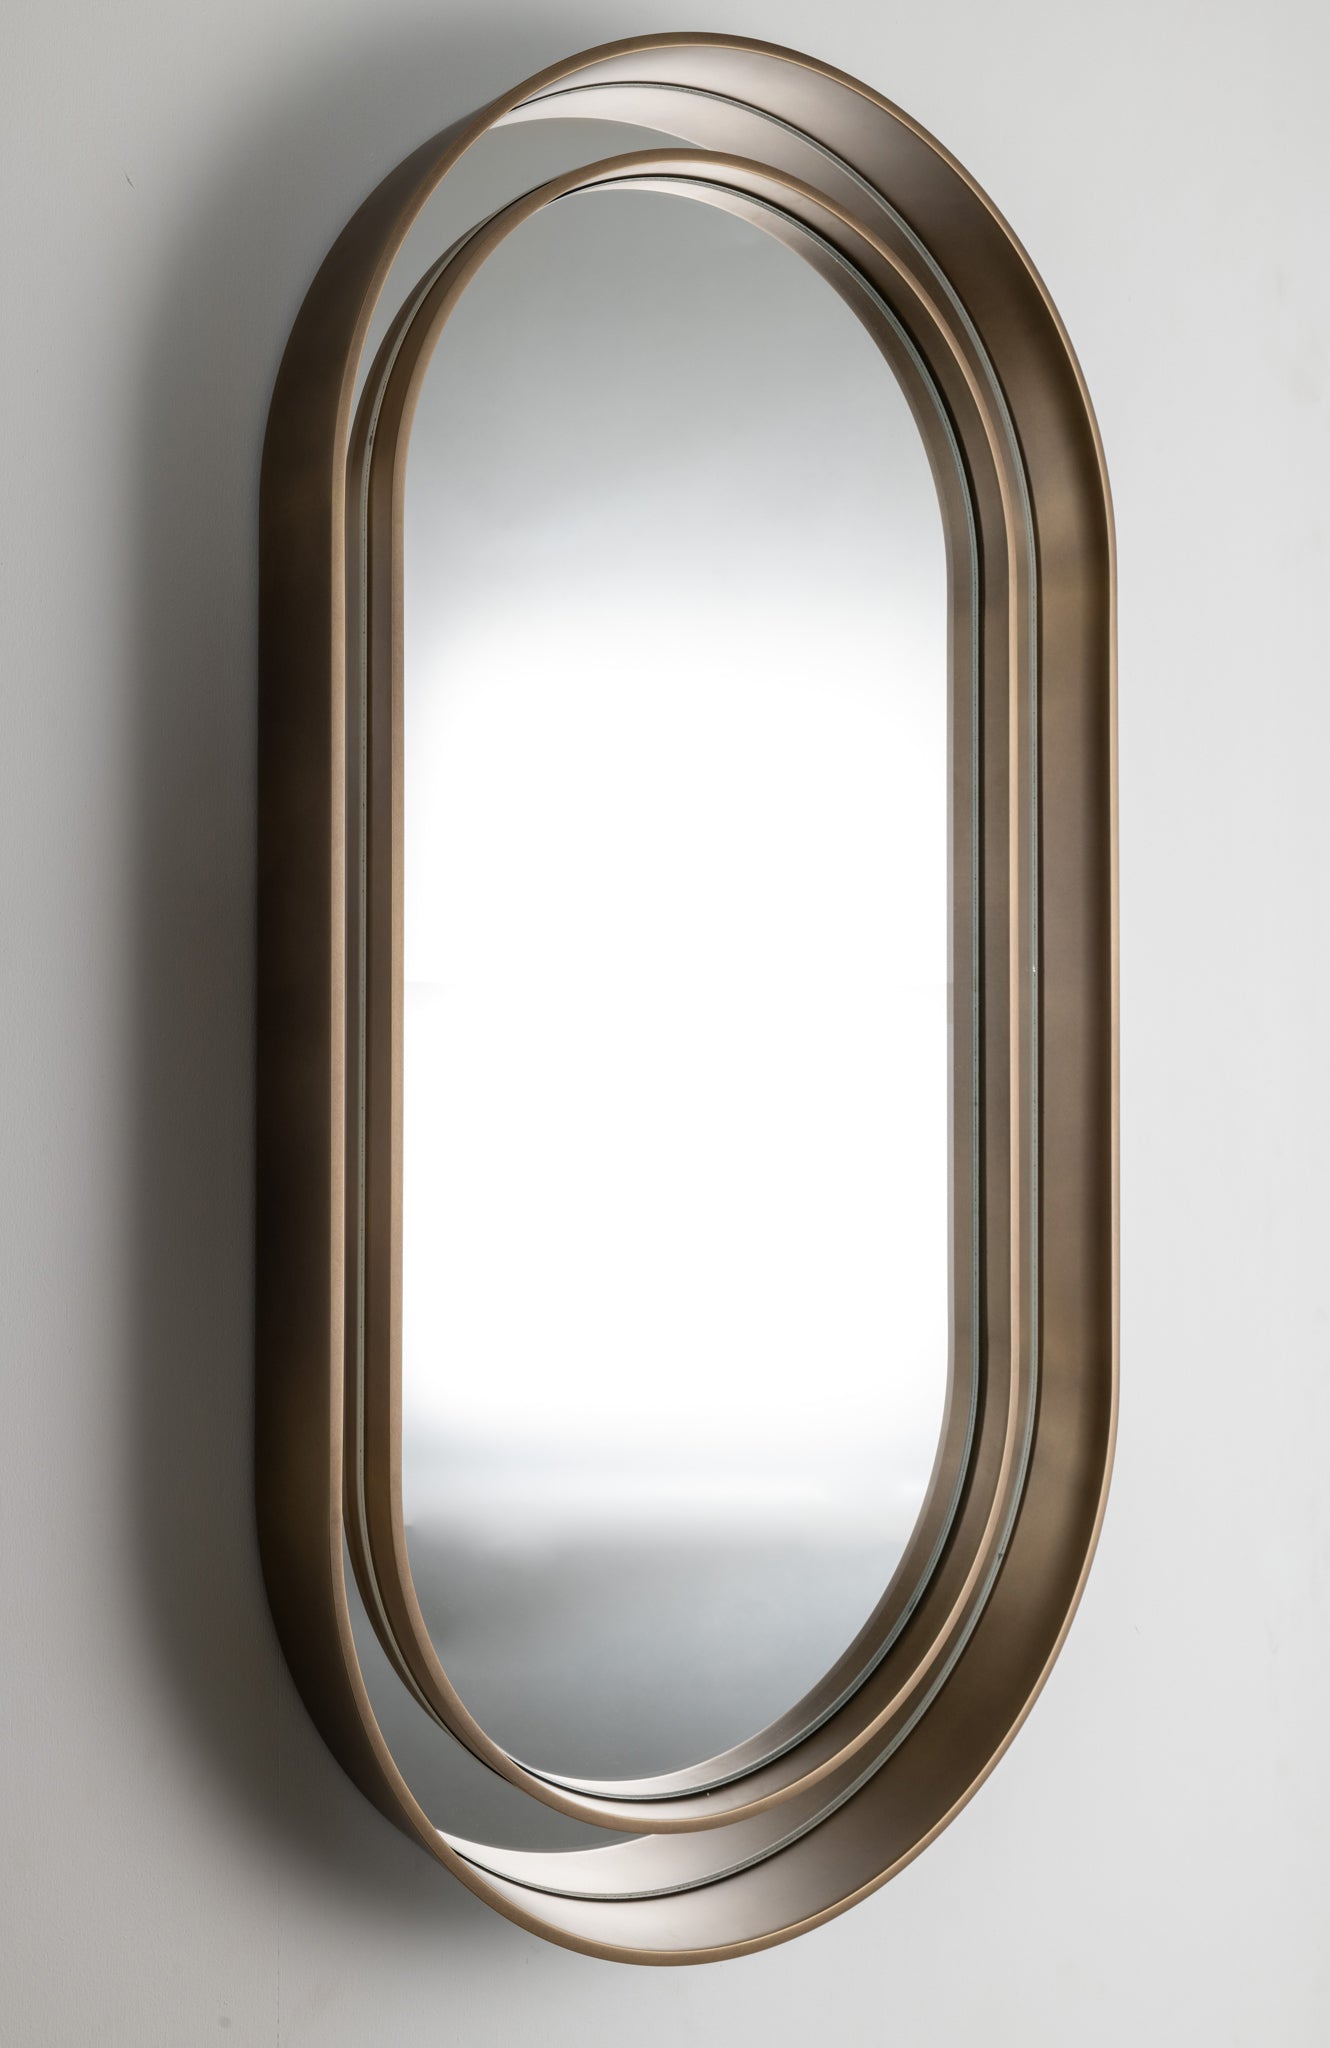 Saint Germain Mirror